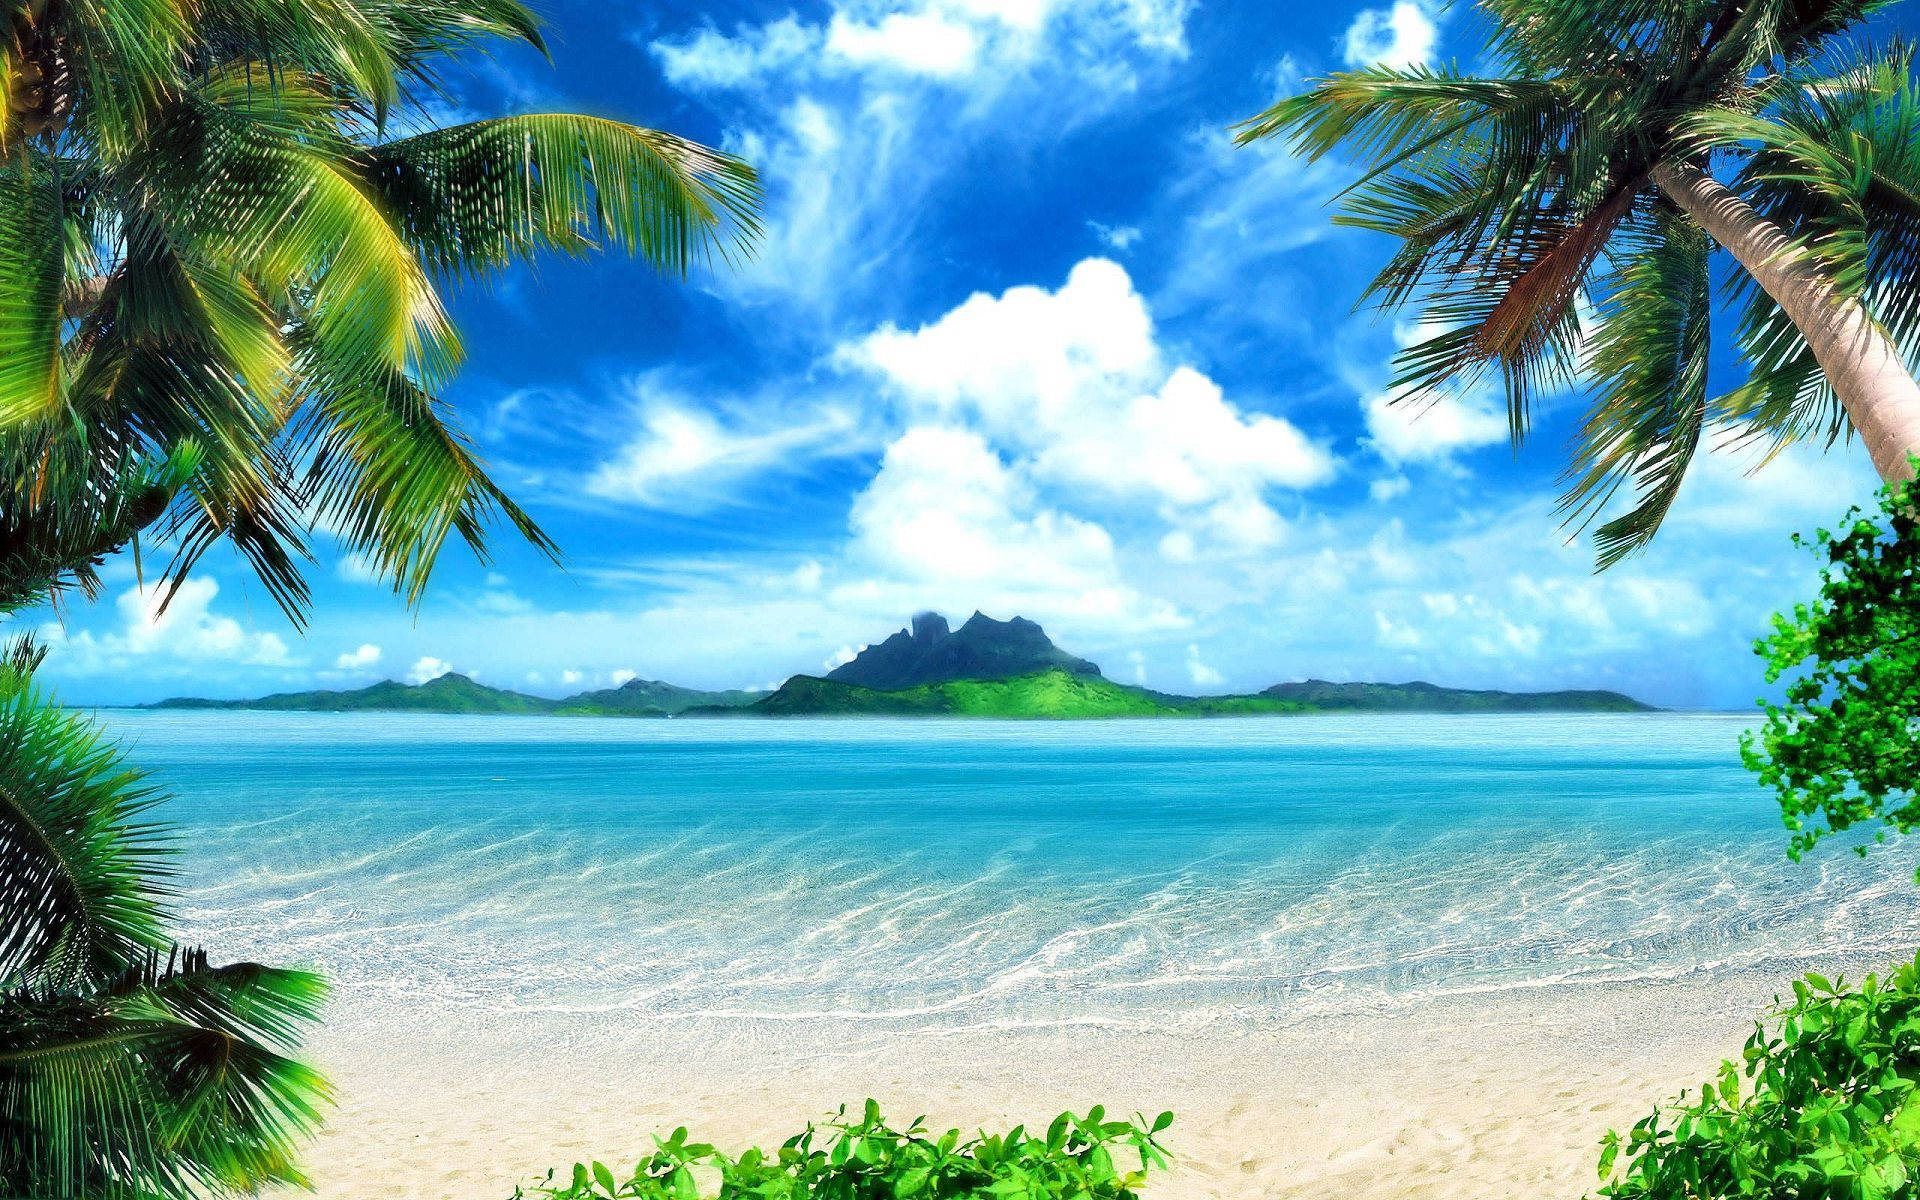 Paradise Found: Enjoy this beautiful beach hidden away in nature Wallpaper